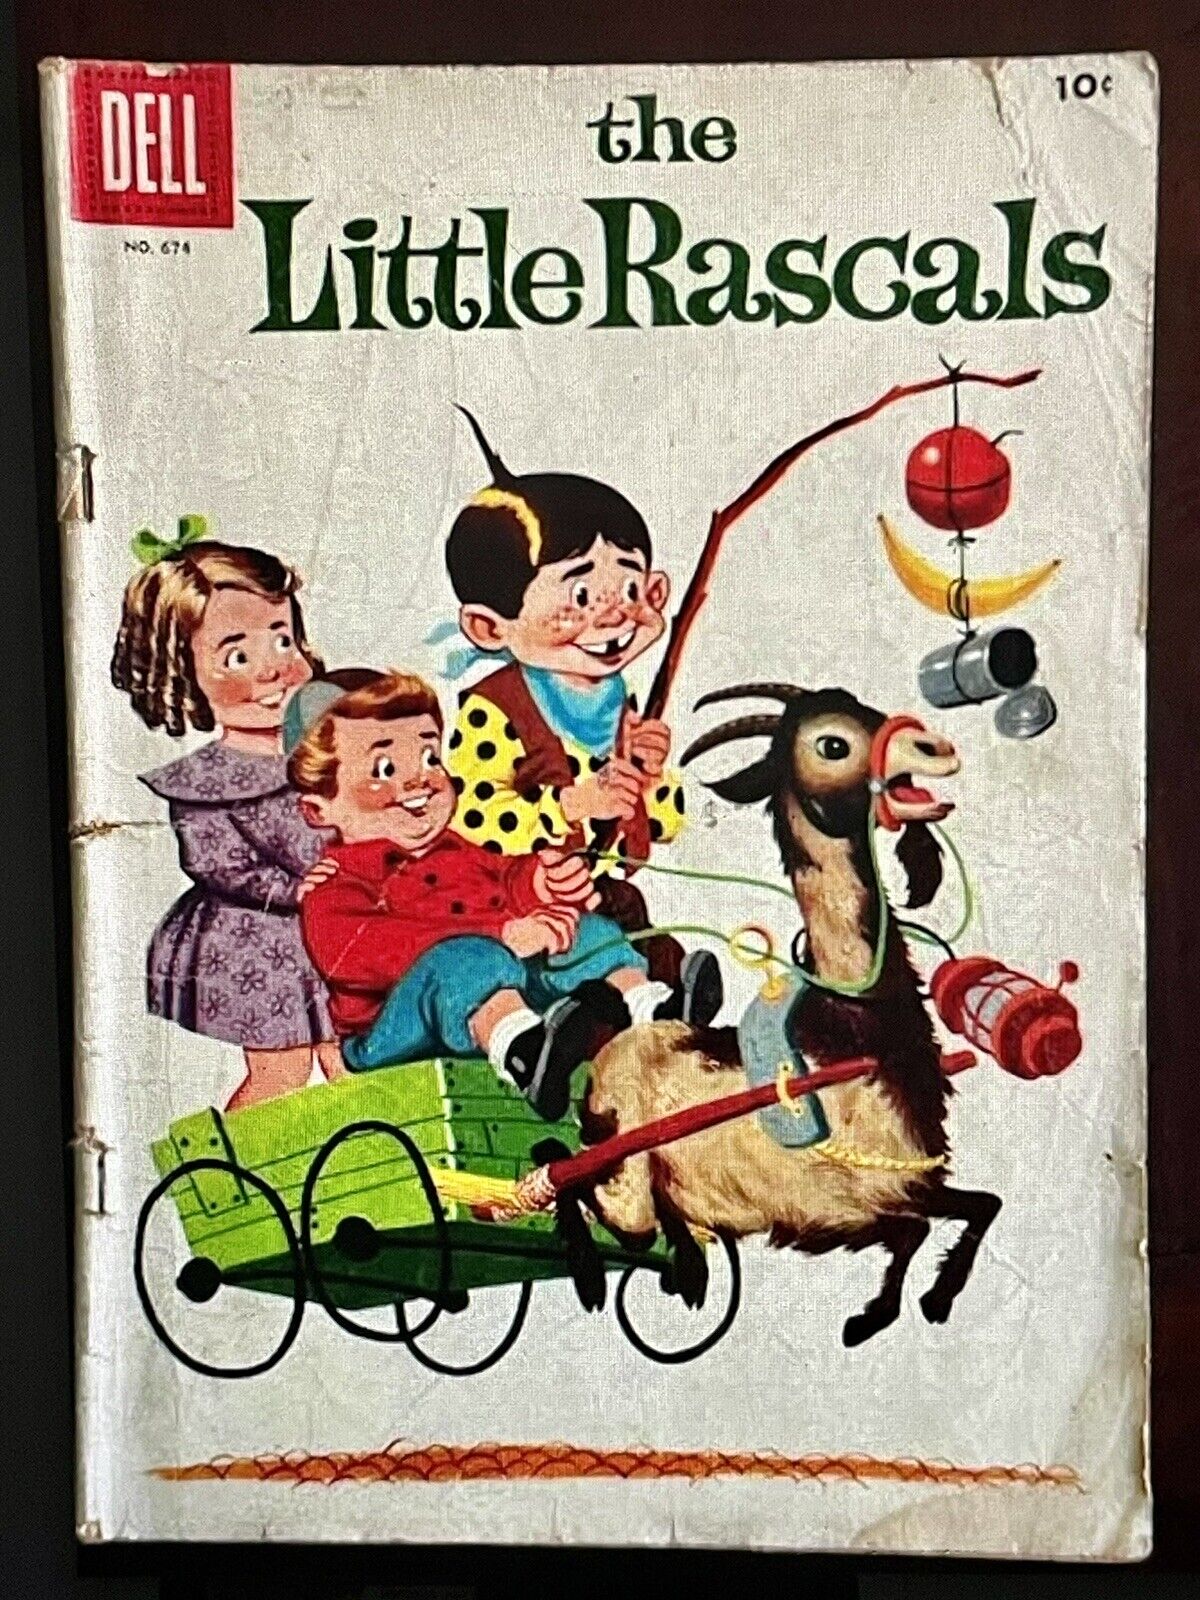 Vtg. Dell The Little Rascals Comics Book # 674 Alfalfa  Buckwheat 10 Cents 1956